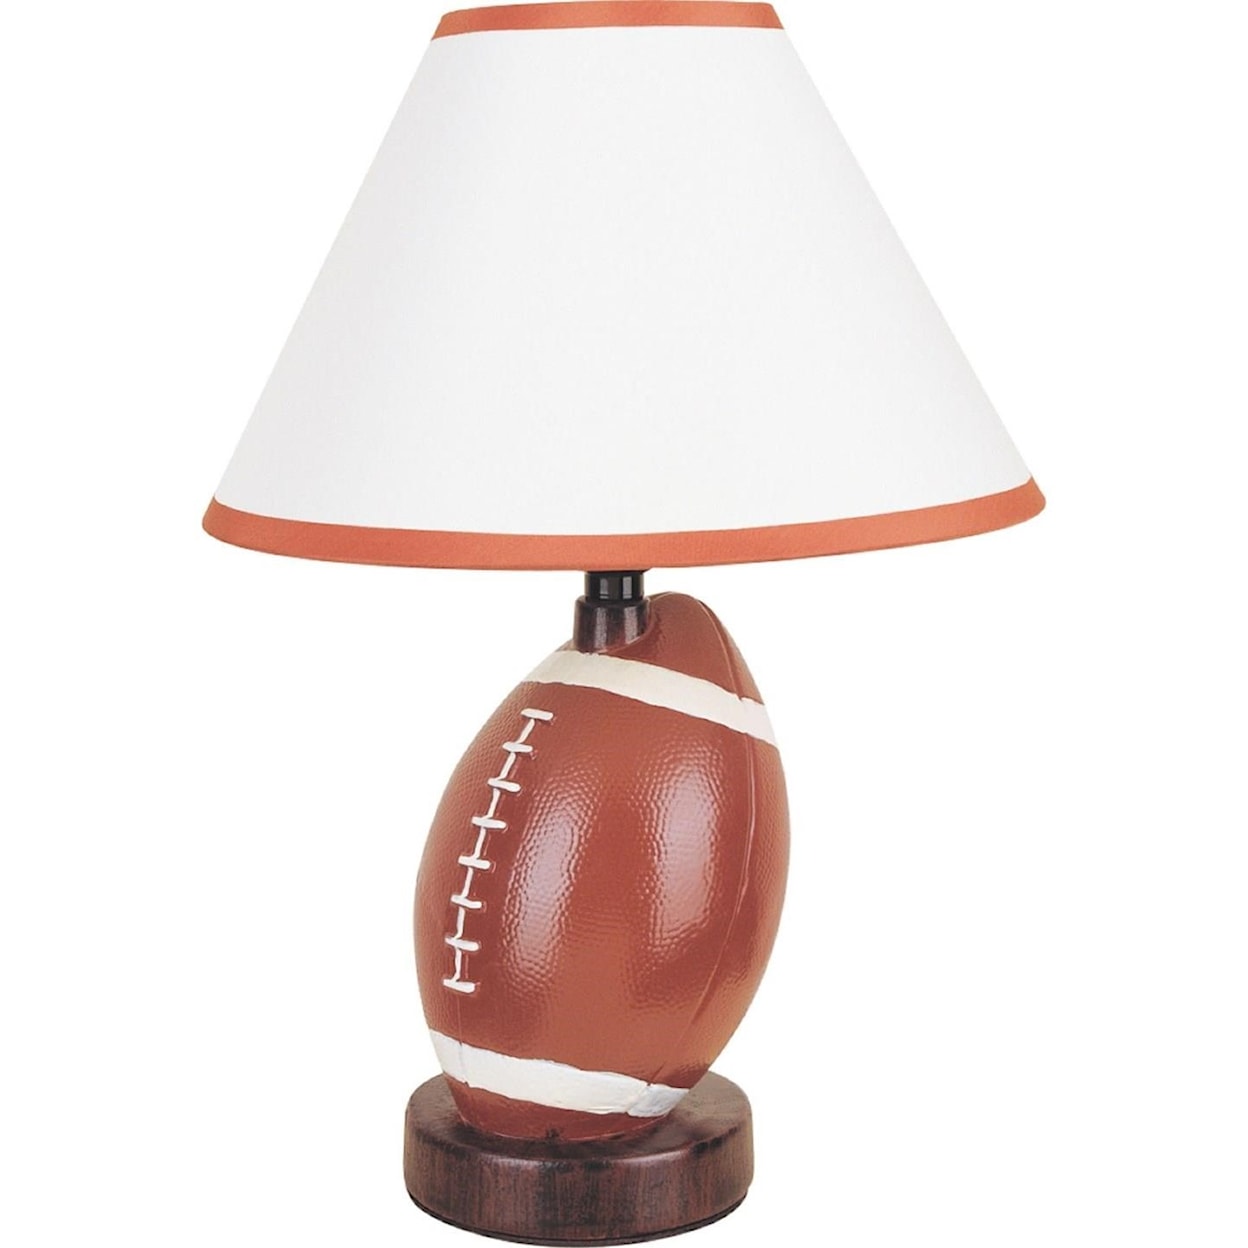 Acme Furniture All Star Football Lamp